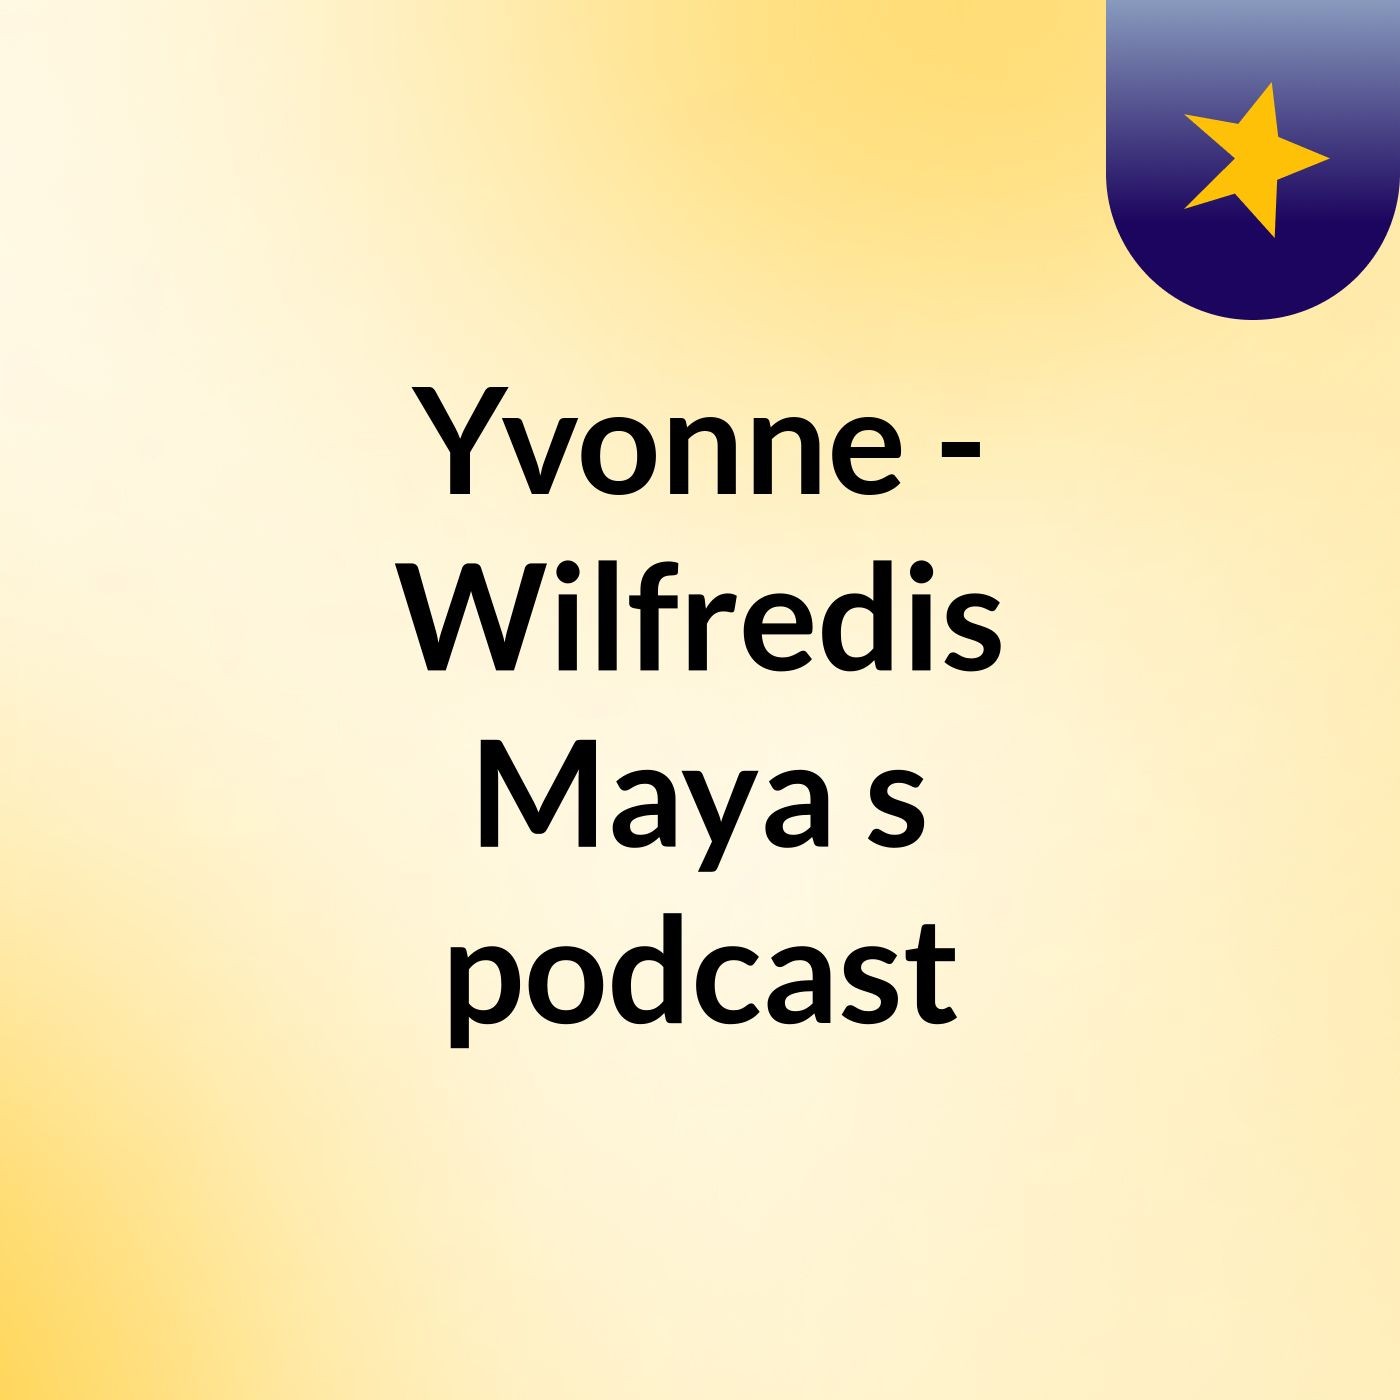 Yvonne - Wilfredis Maya's podcast